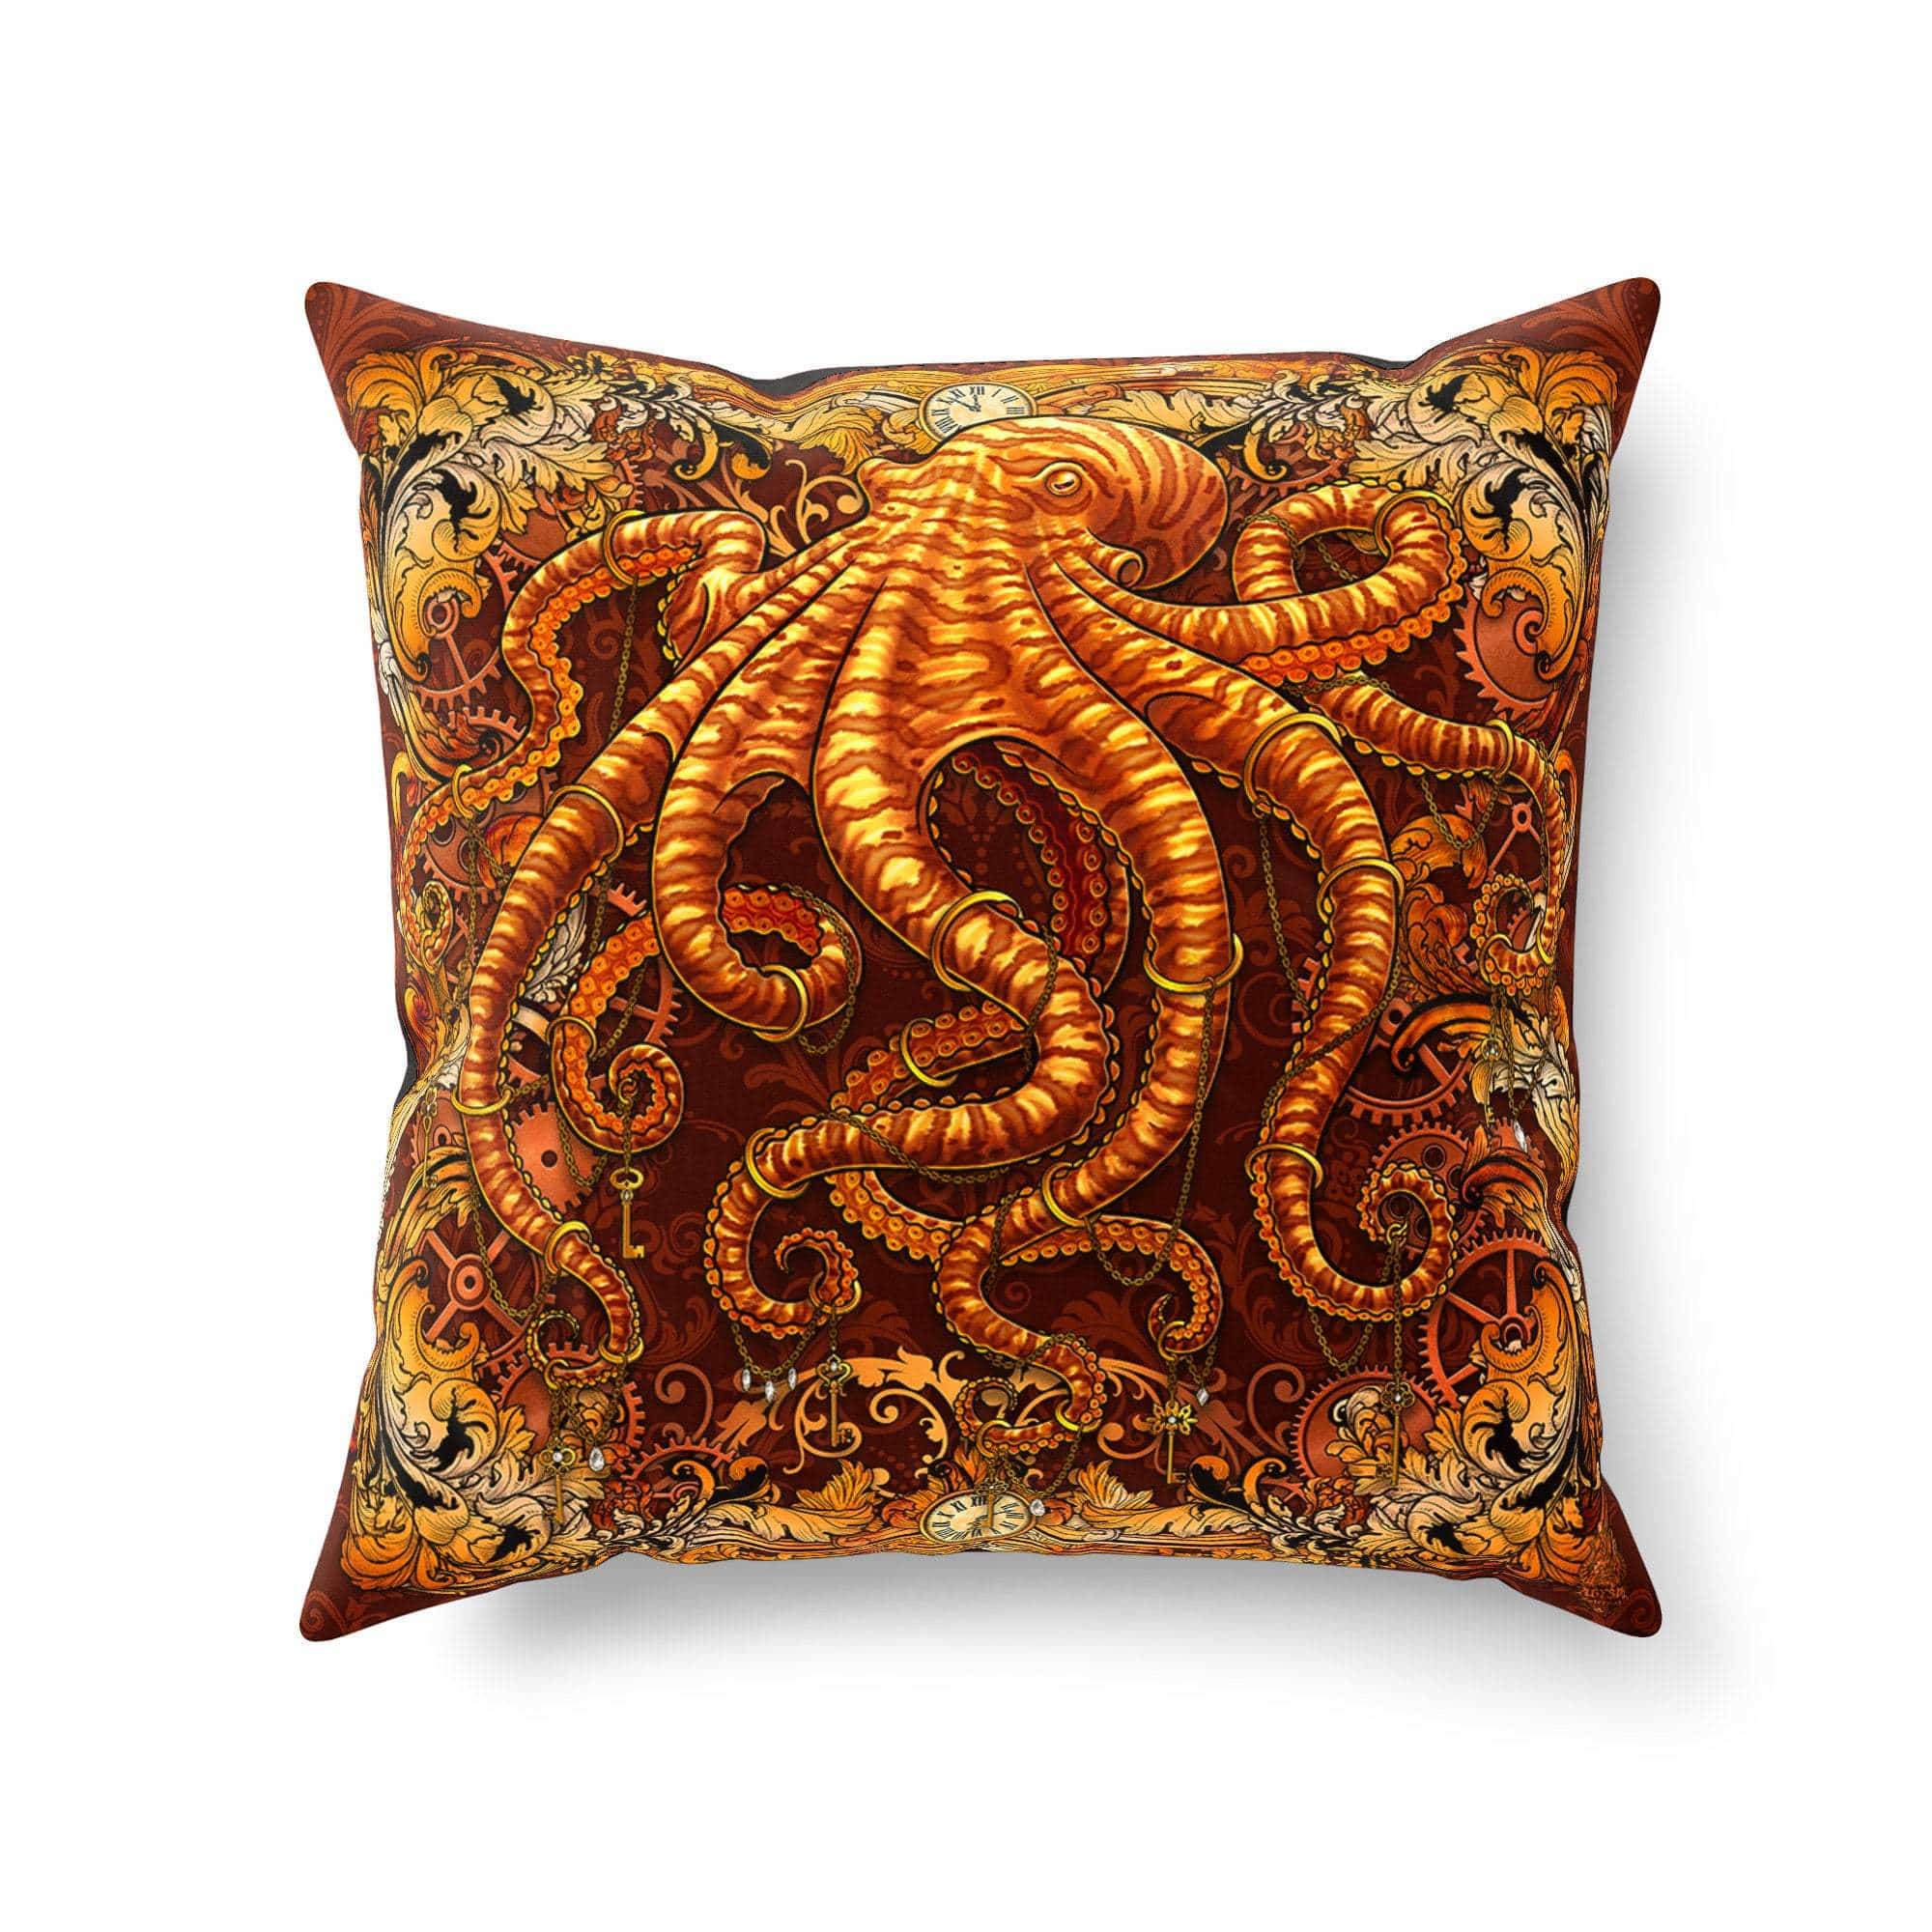 Steampunk Throw Pillow, Decorative Accent Cushion, Octopus, Coastal Home Decor - Abysm Internal